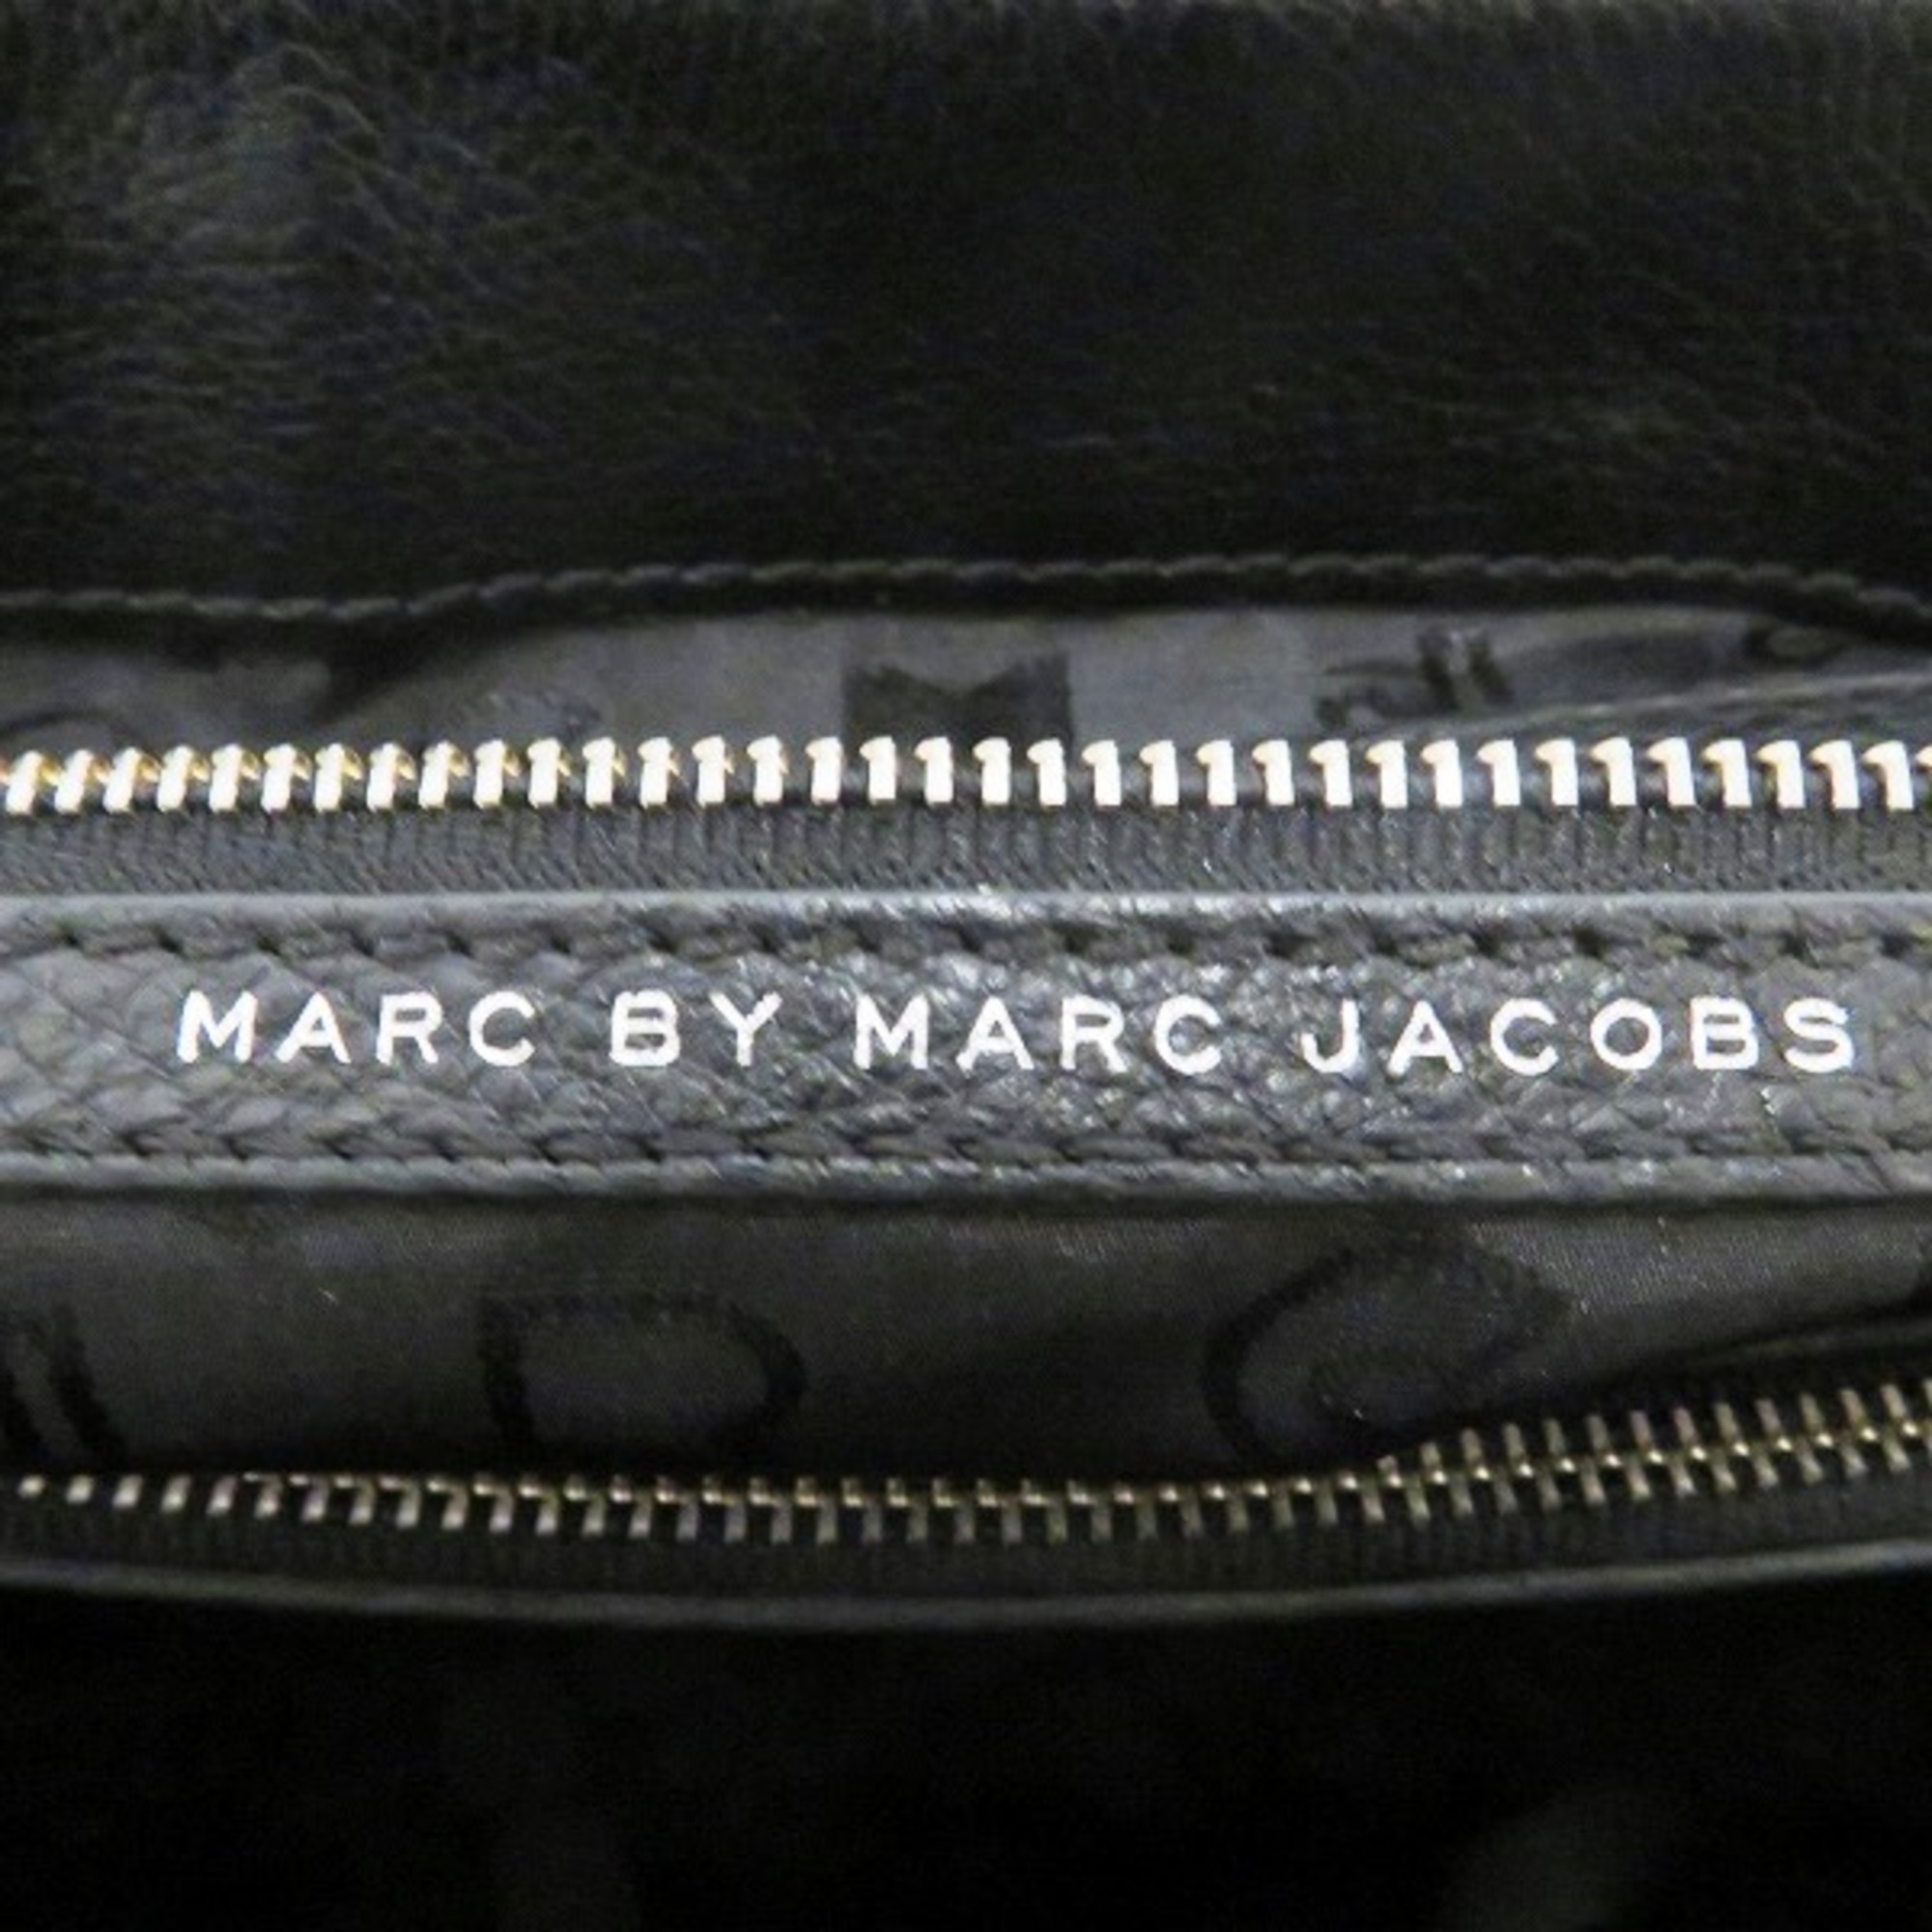 Marc by Marc Jacobs Marc by Jacobs Bag Handbag Shoulder Ladies